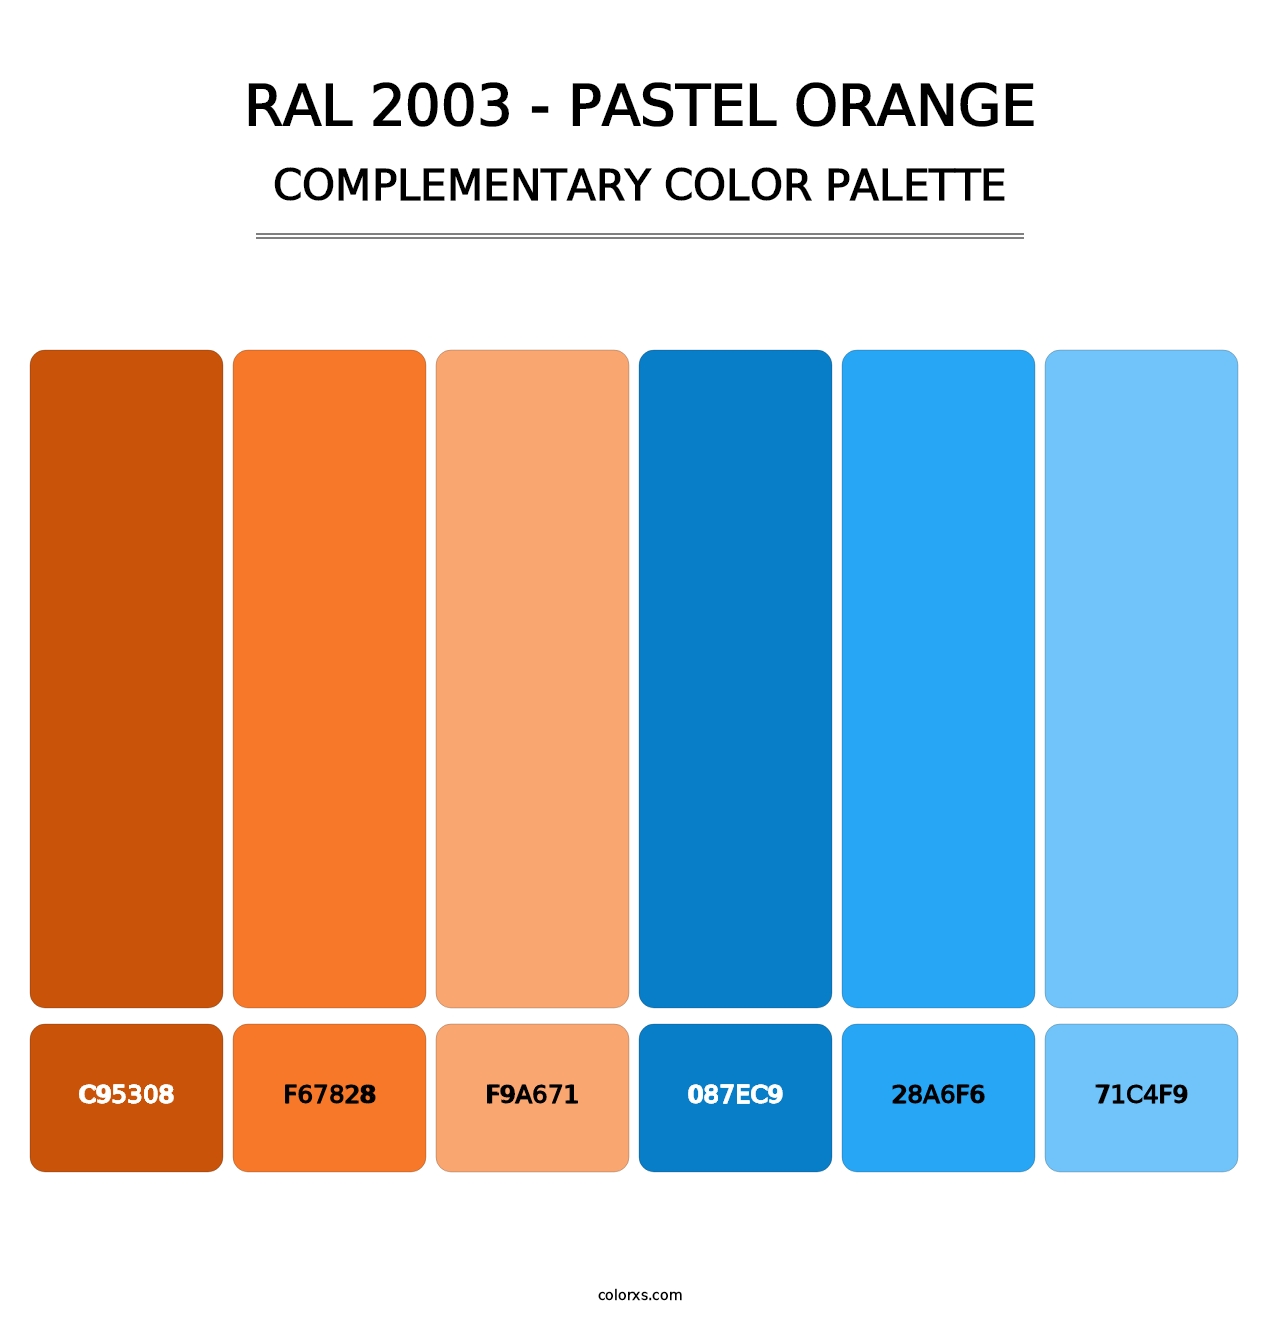 RAL 2003 - Pastel Orange - Complementary Color Palette